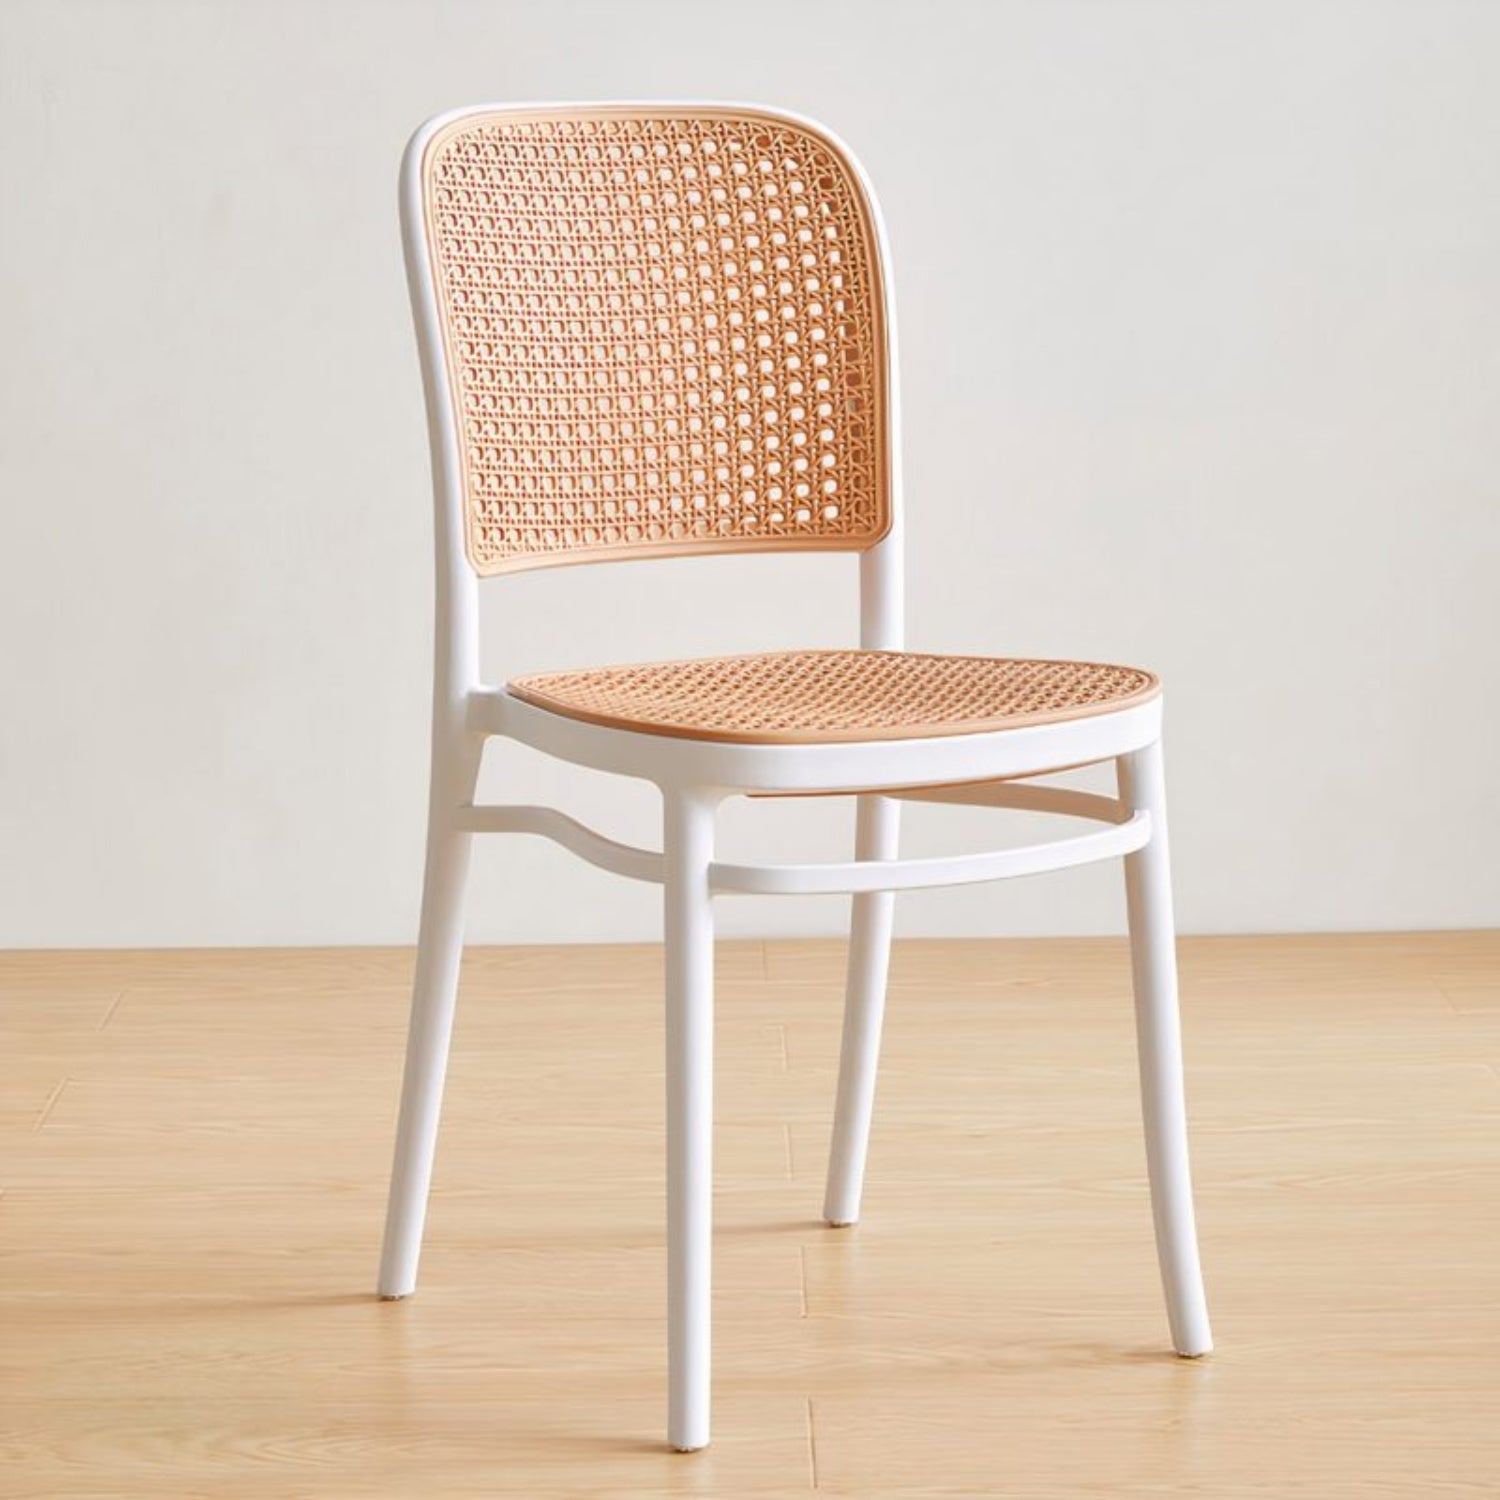 villa nova rattan weave plastic chair white stable legs